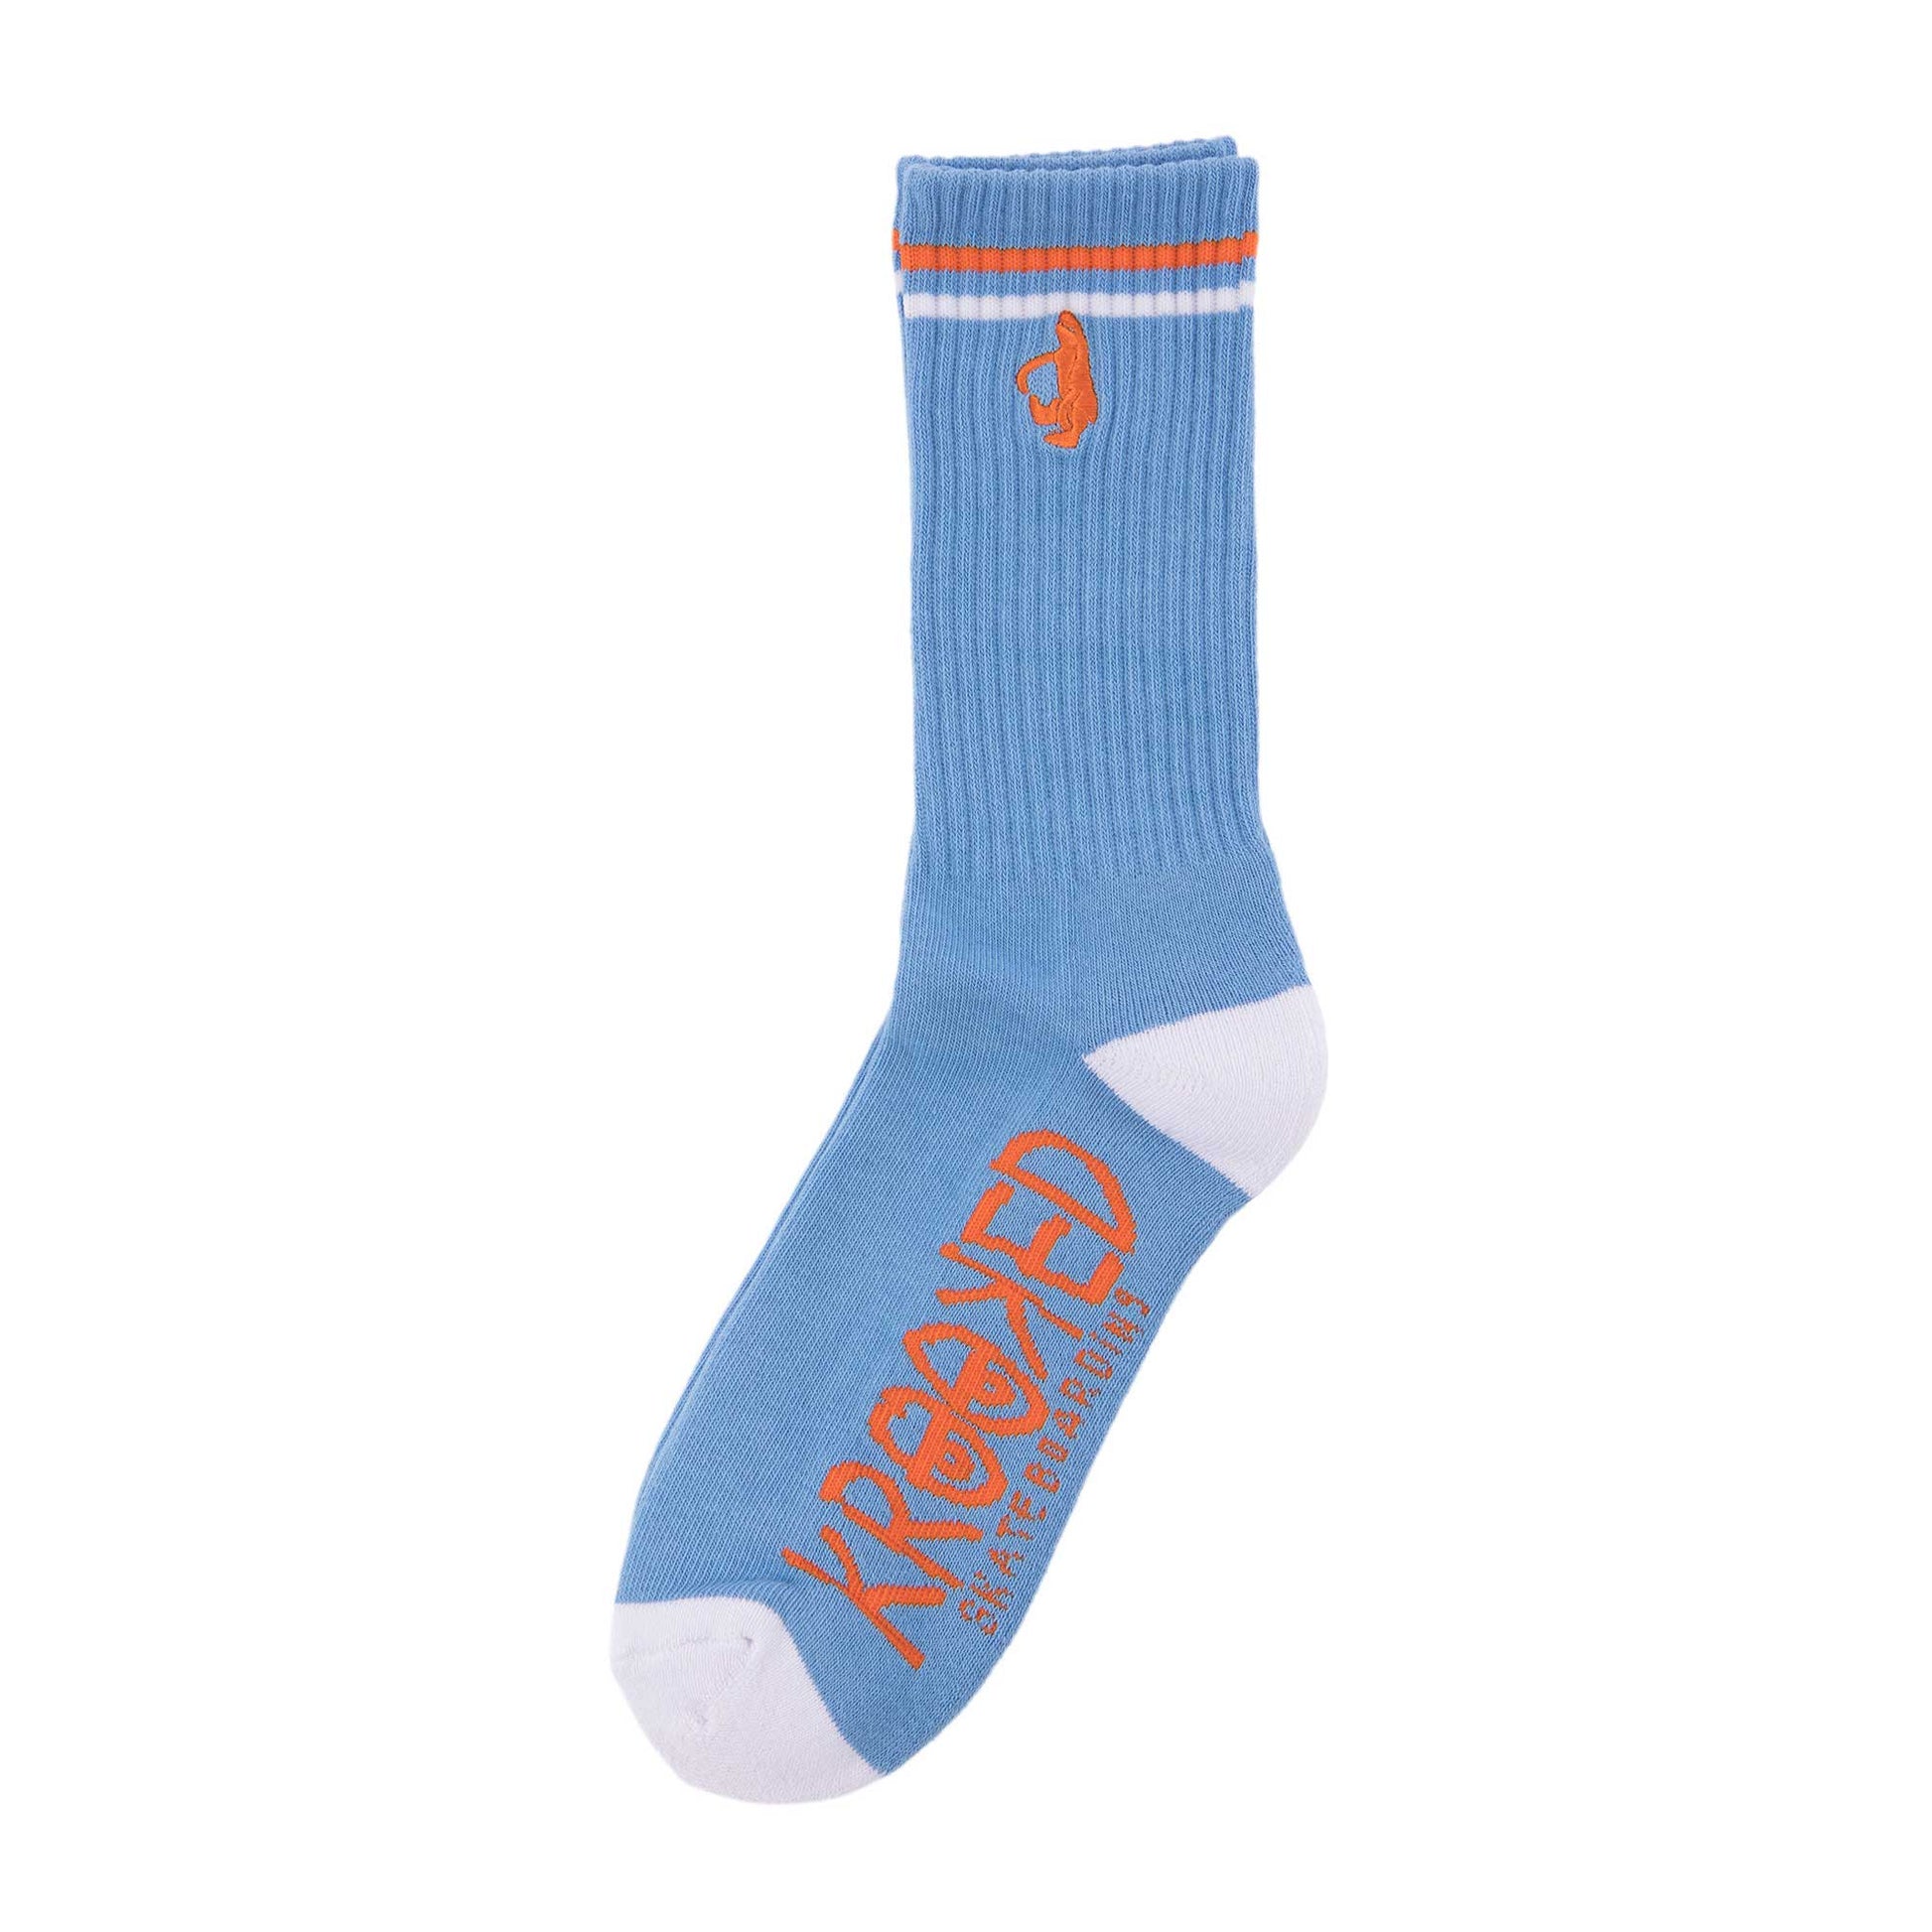 Krooked Shmoo Sock, blue/white/orange - Tiki Room Skateboards - 1